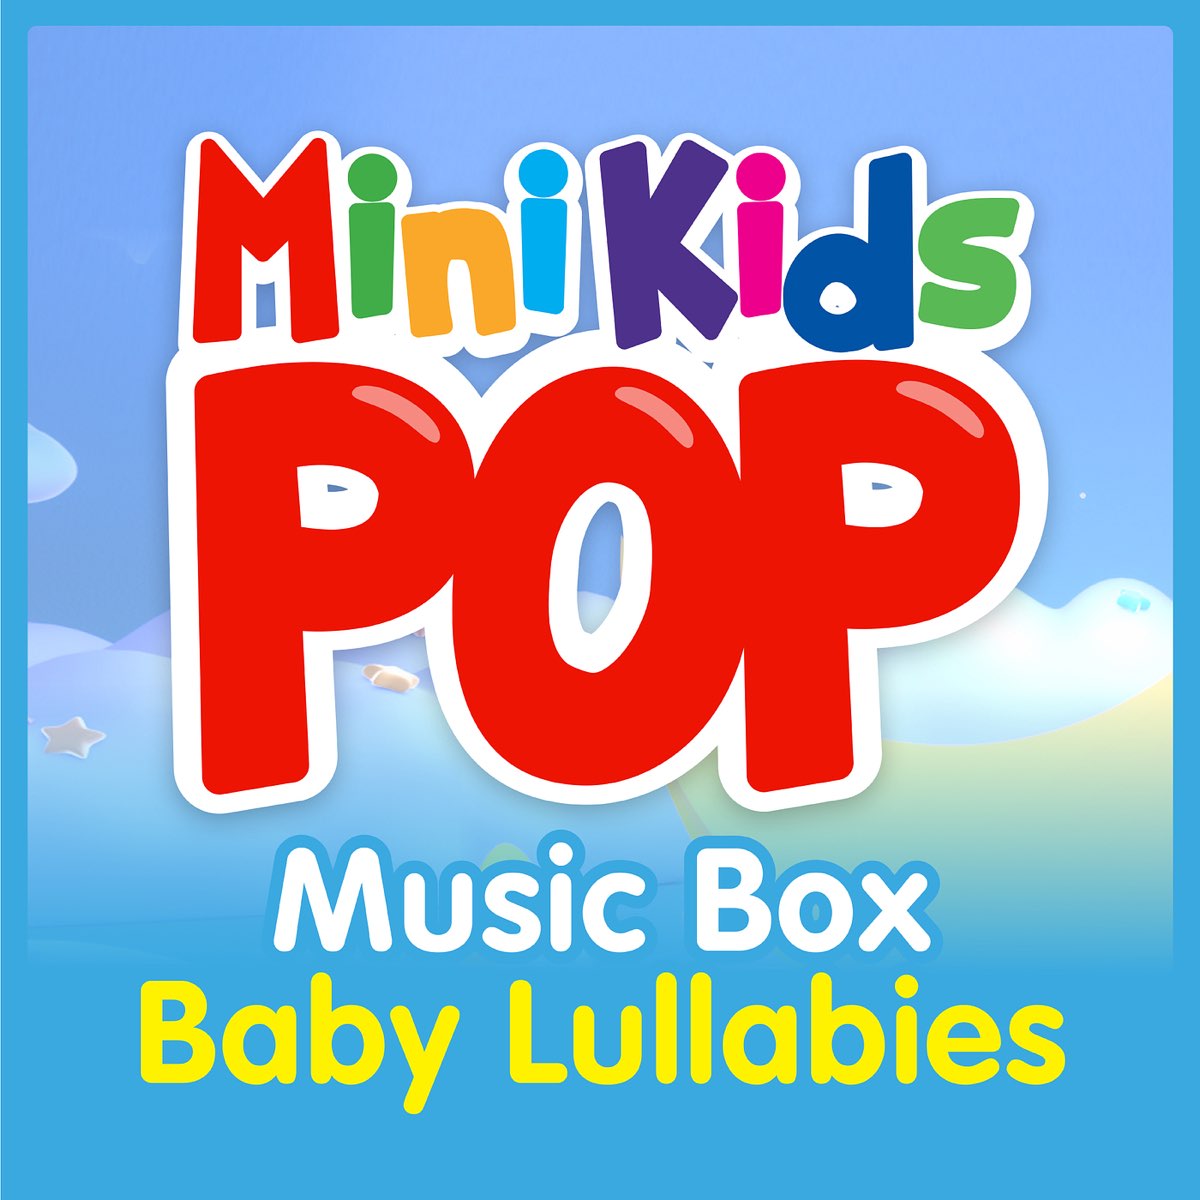 Music Box Baby Lullabies by Mini Kids Pop on Apple Music